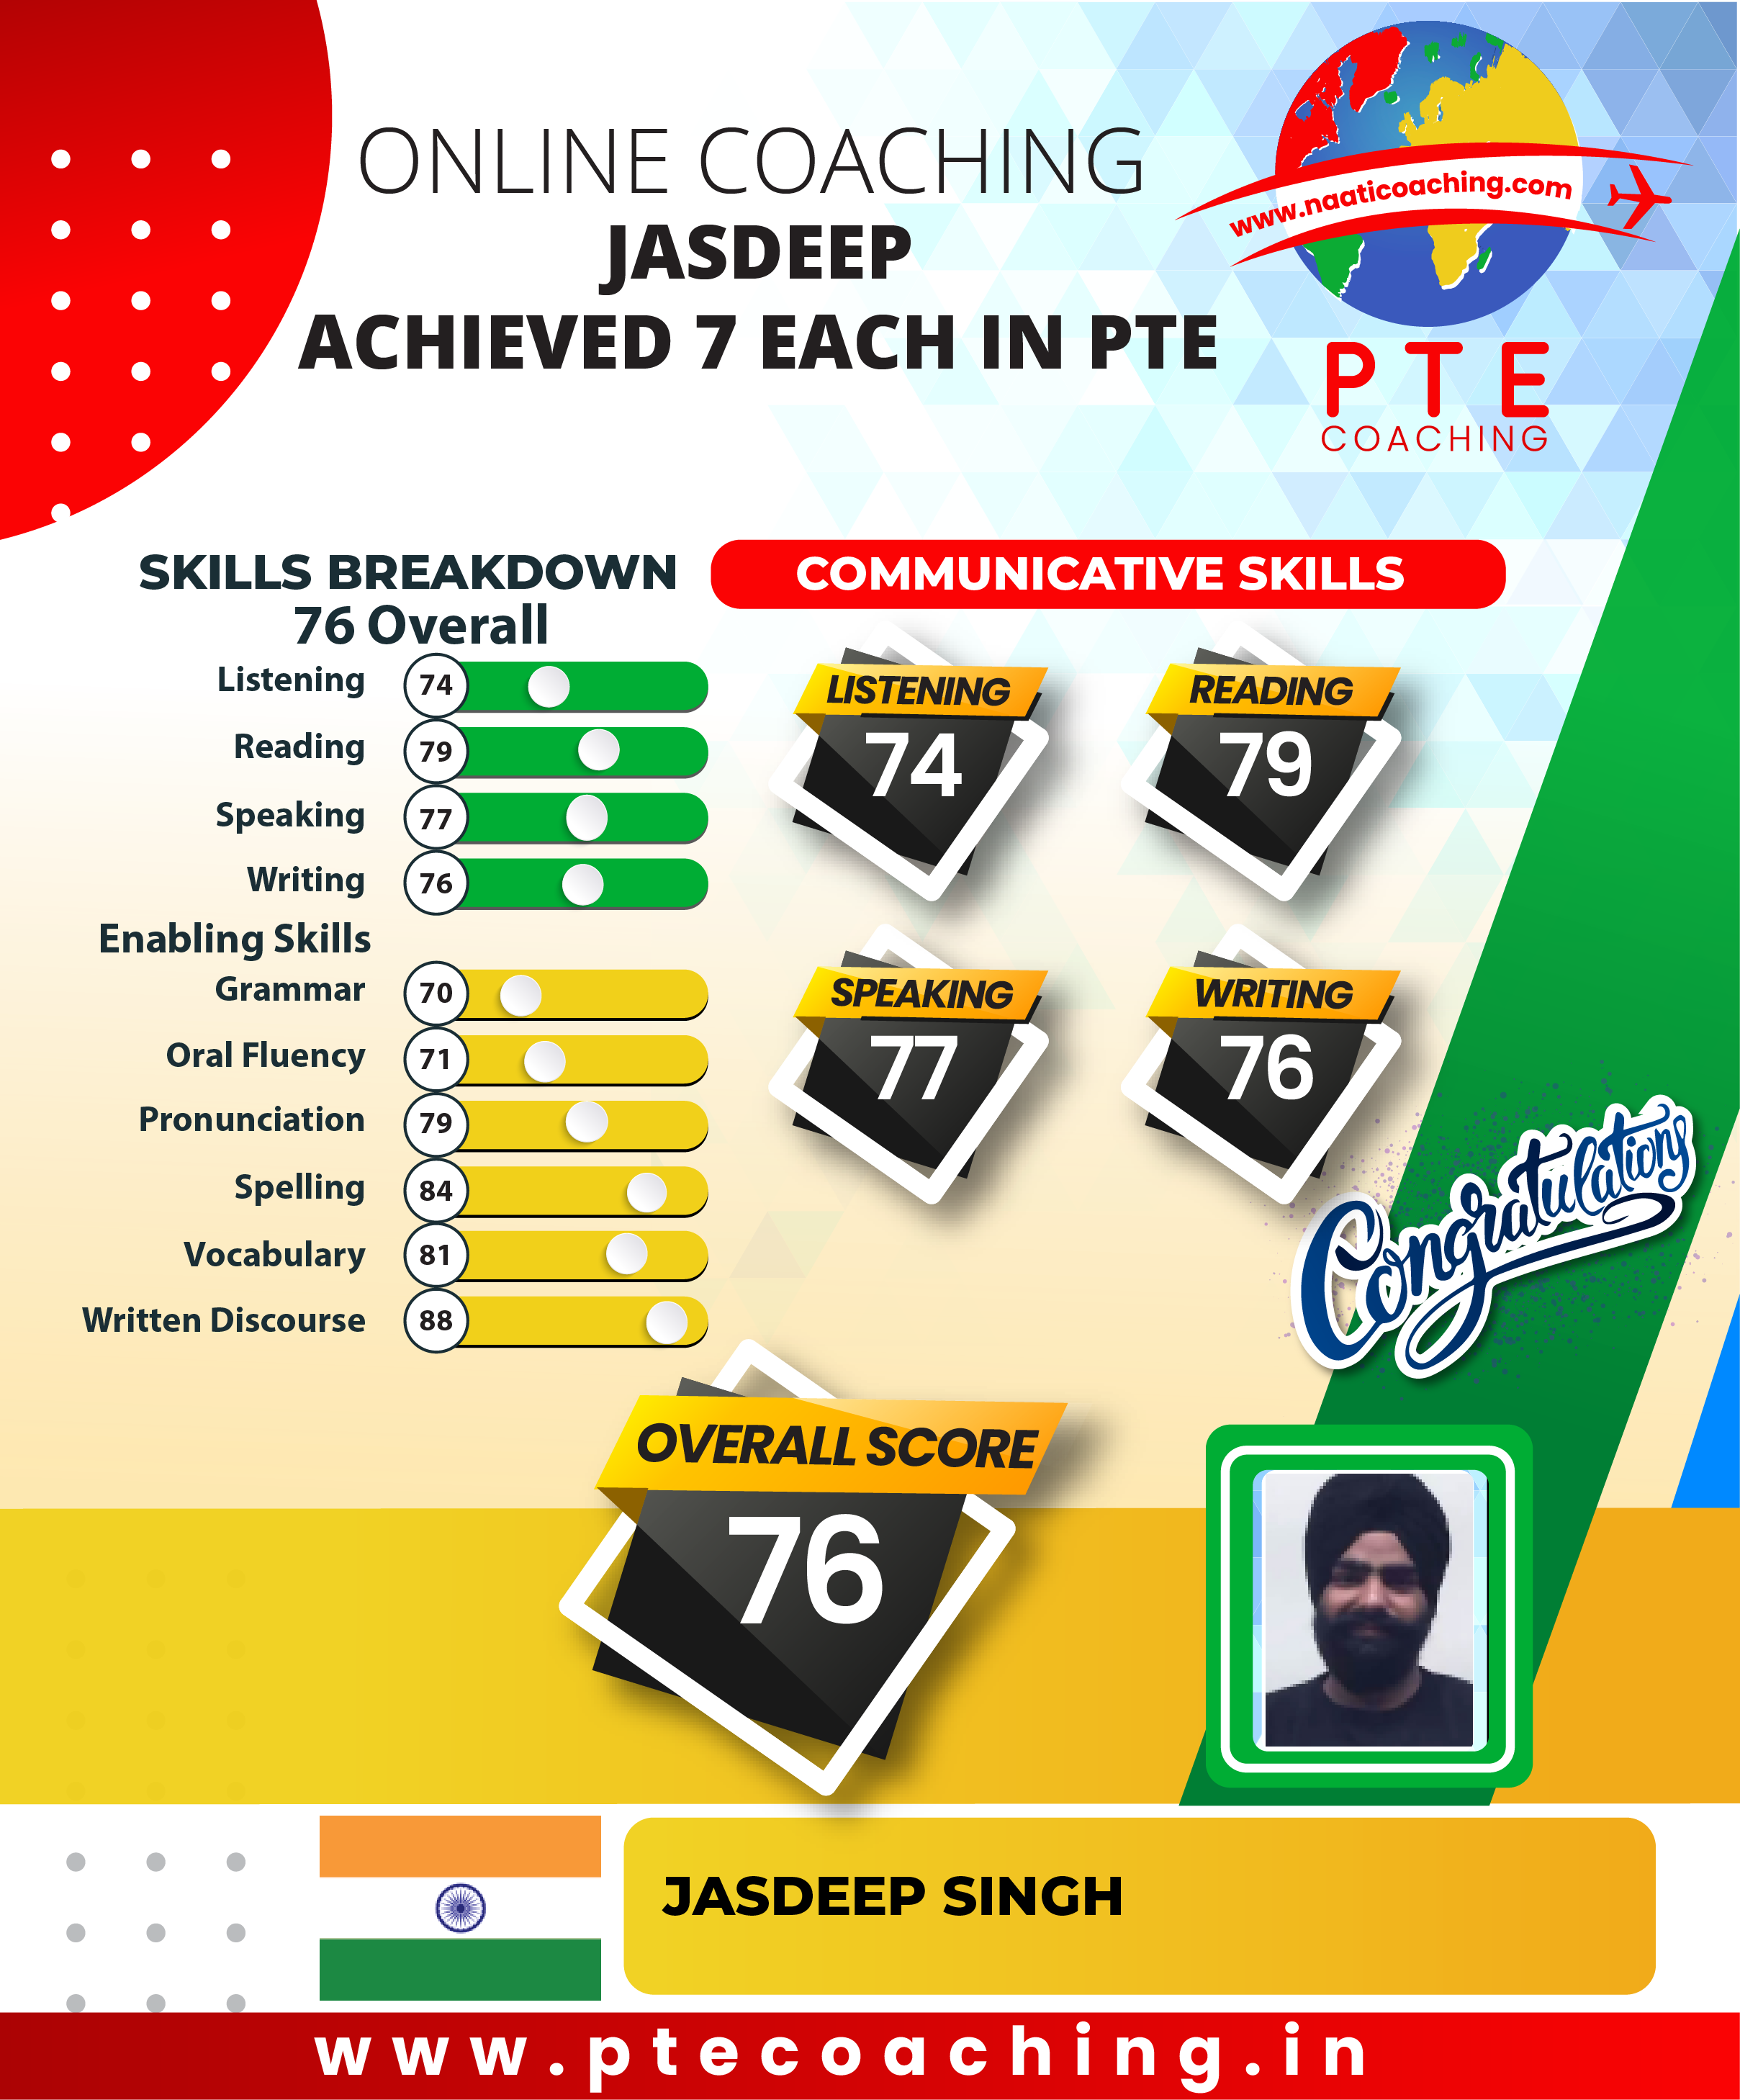 PTE Coaching Scorecard - Jasdeep achieved 7 each in PTE